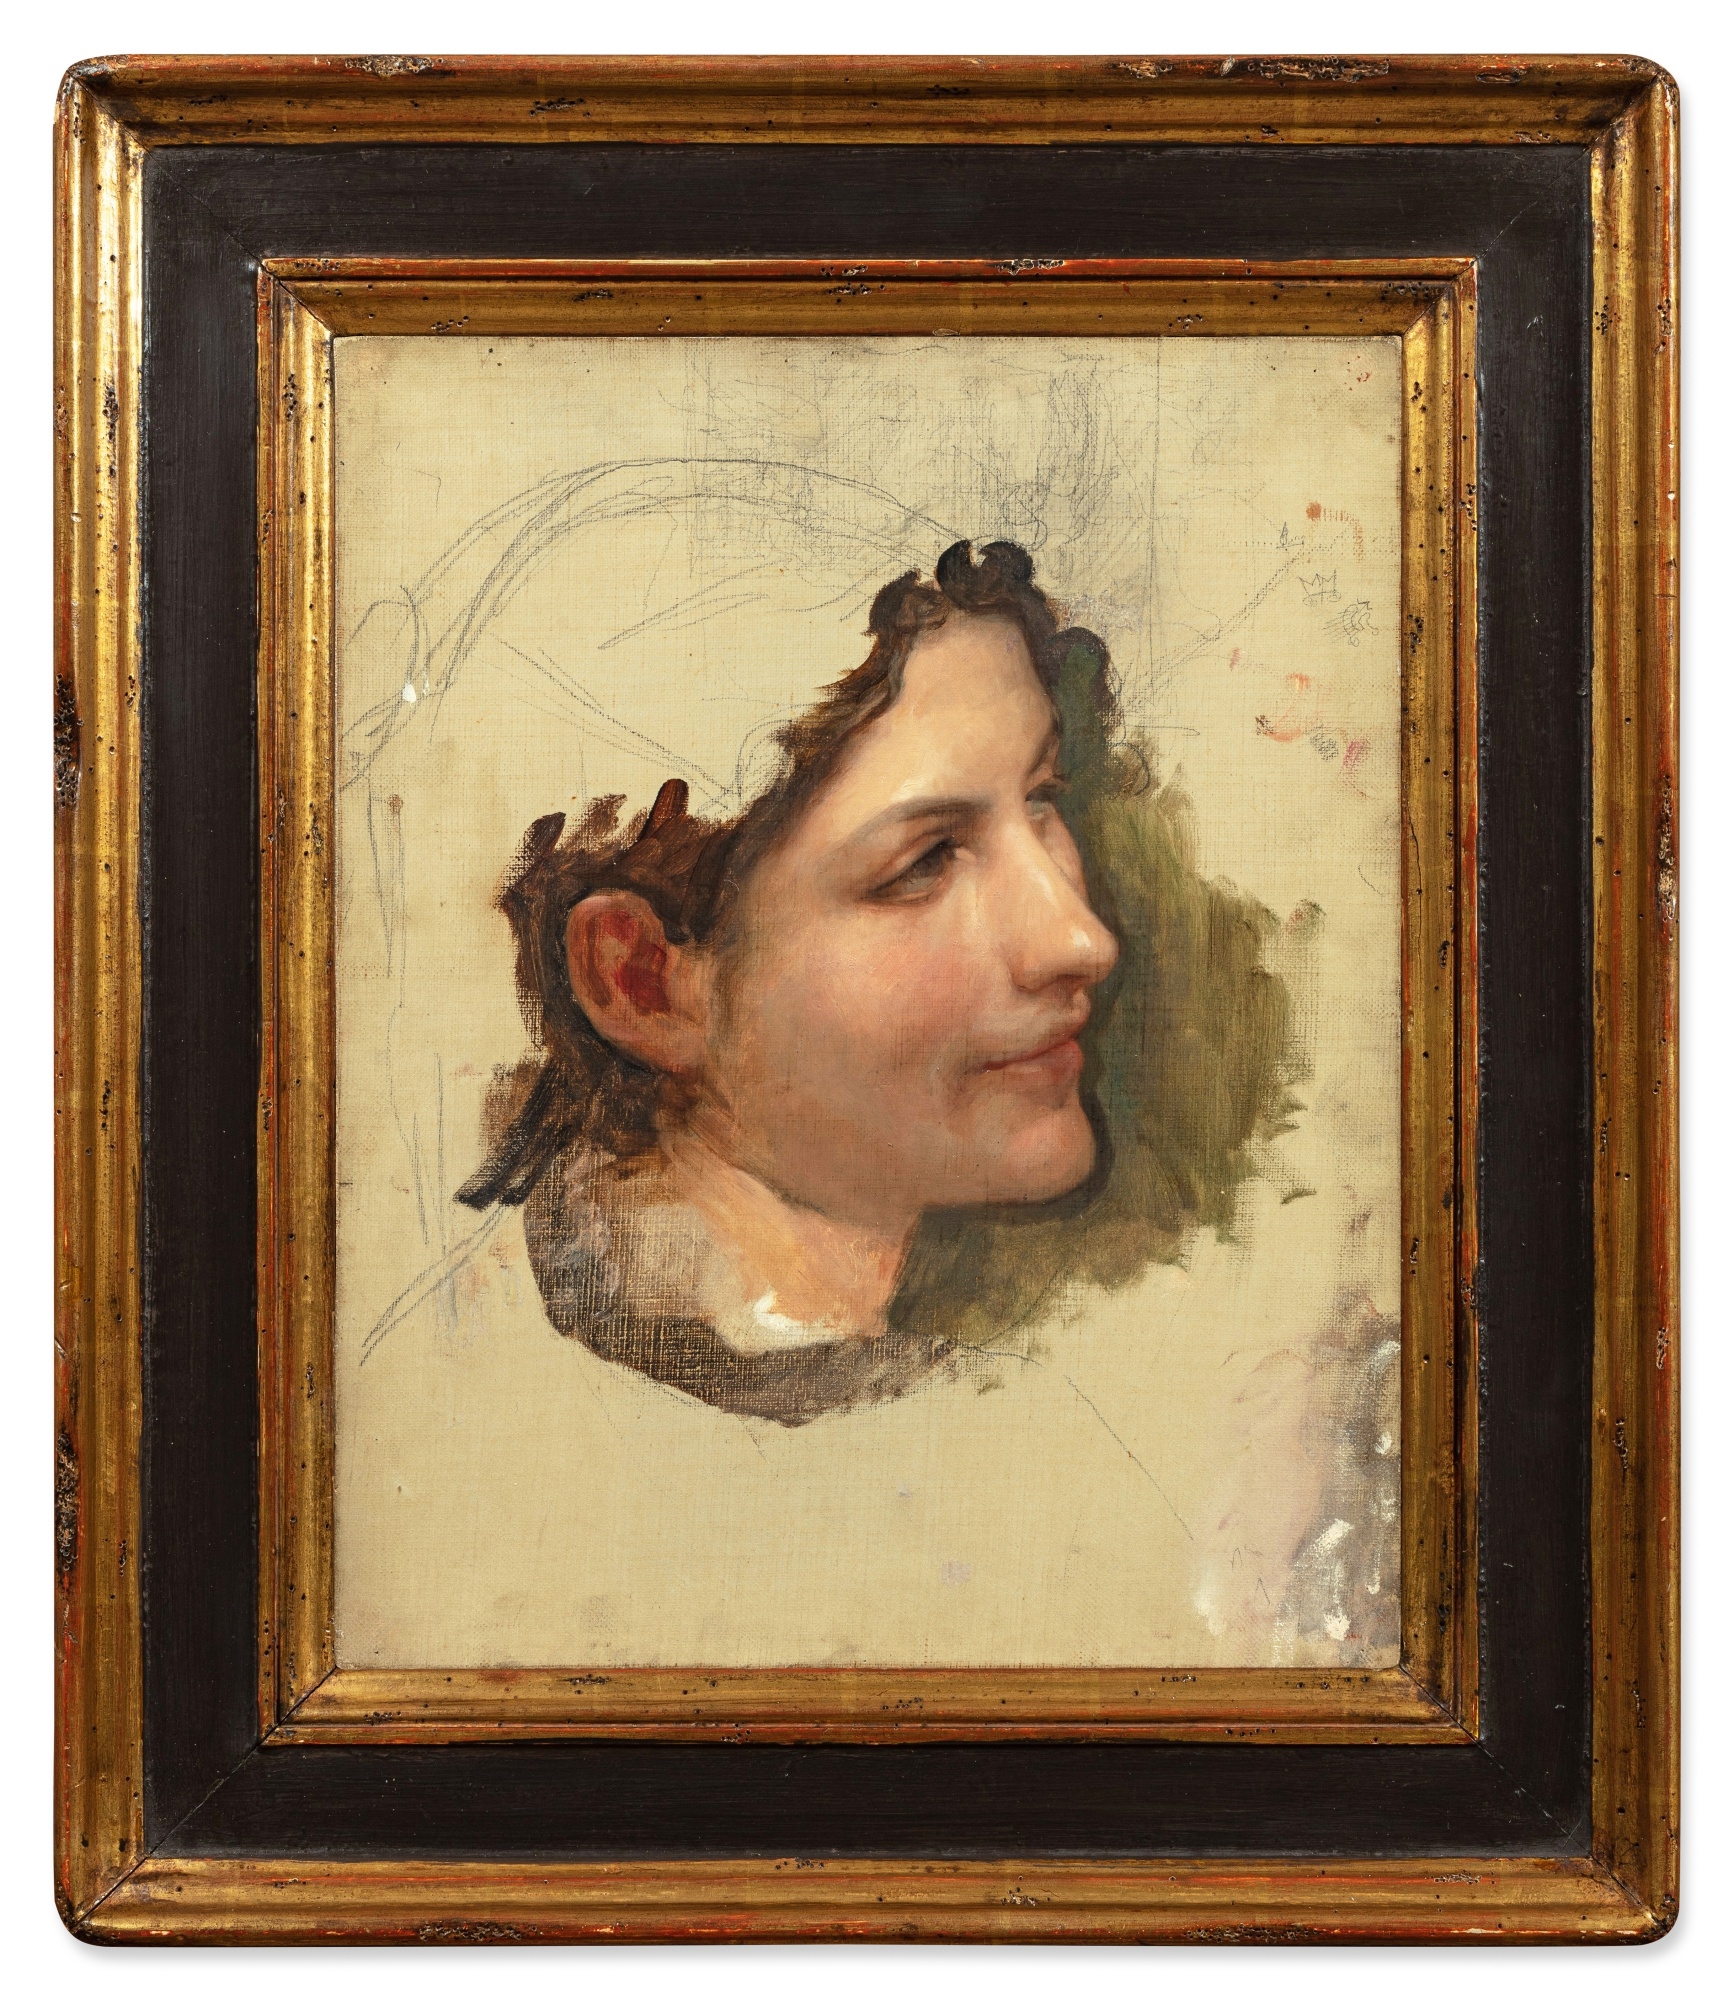 Artwork by William Adolphe Bouguereau, Etude de tête de femme, Made of oil on canvas